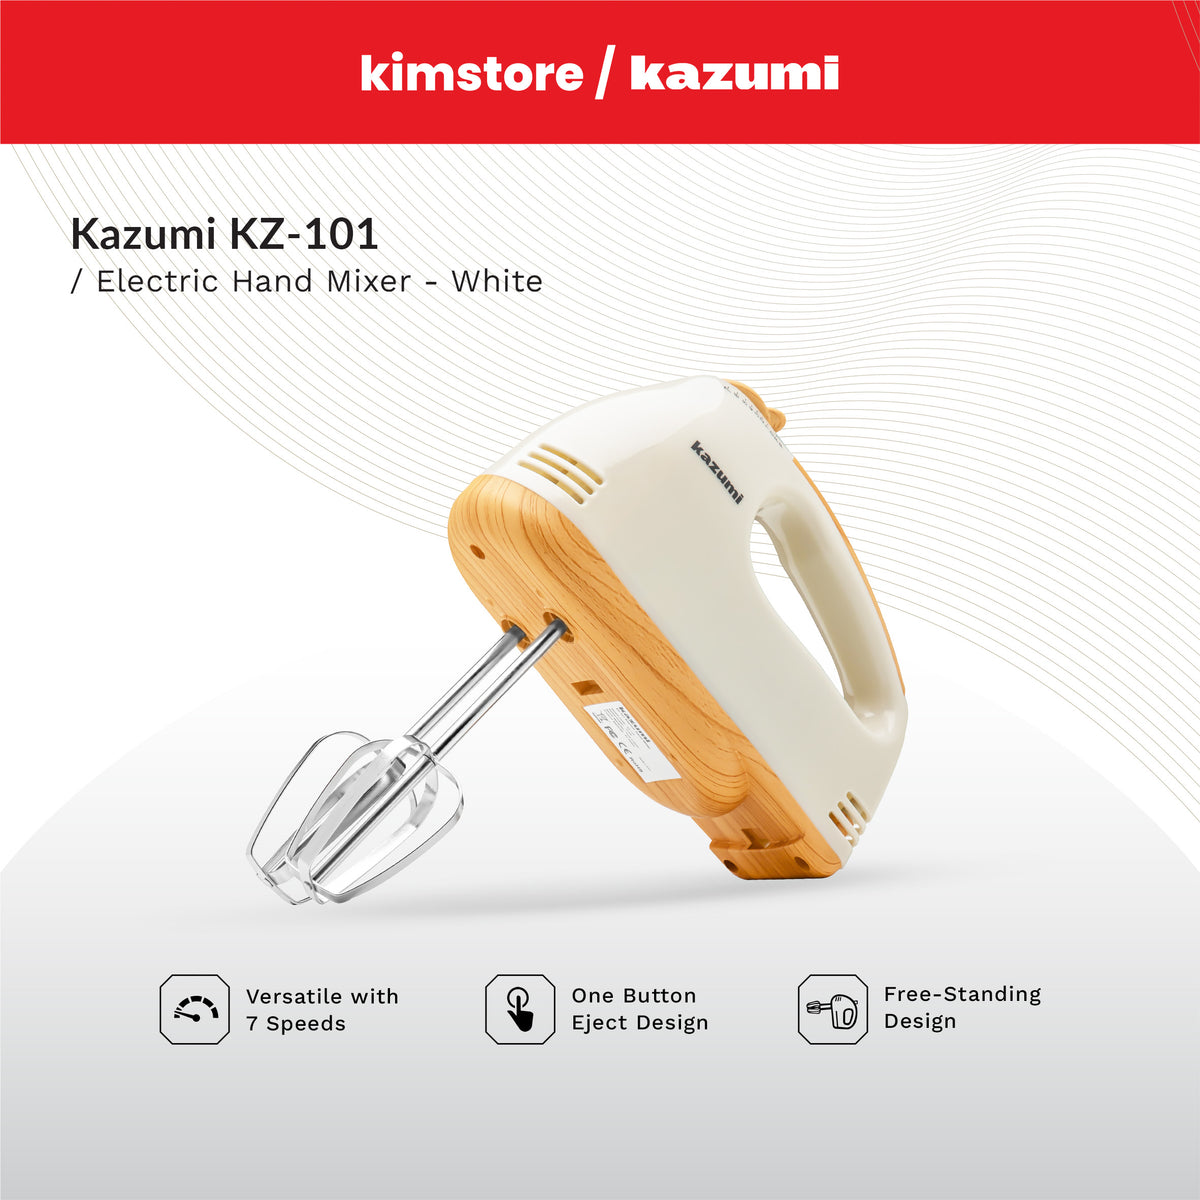 Kazumi KZ-101 Electric Hand Mixer